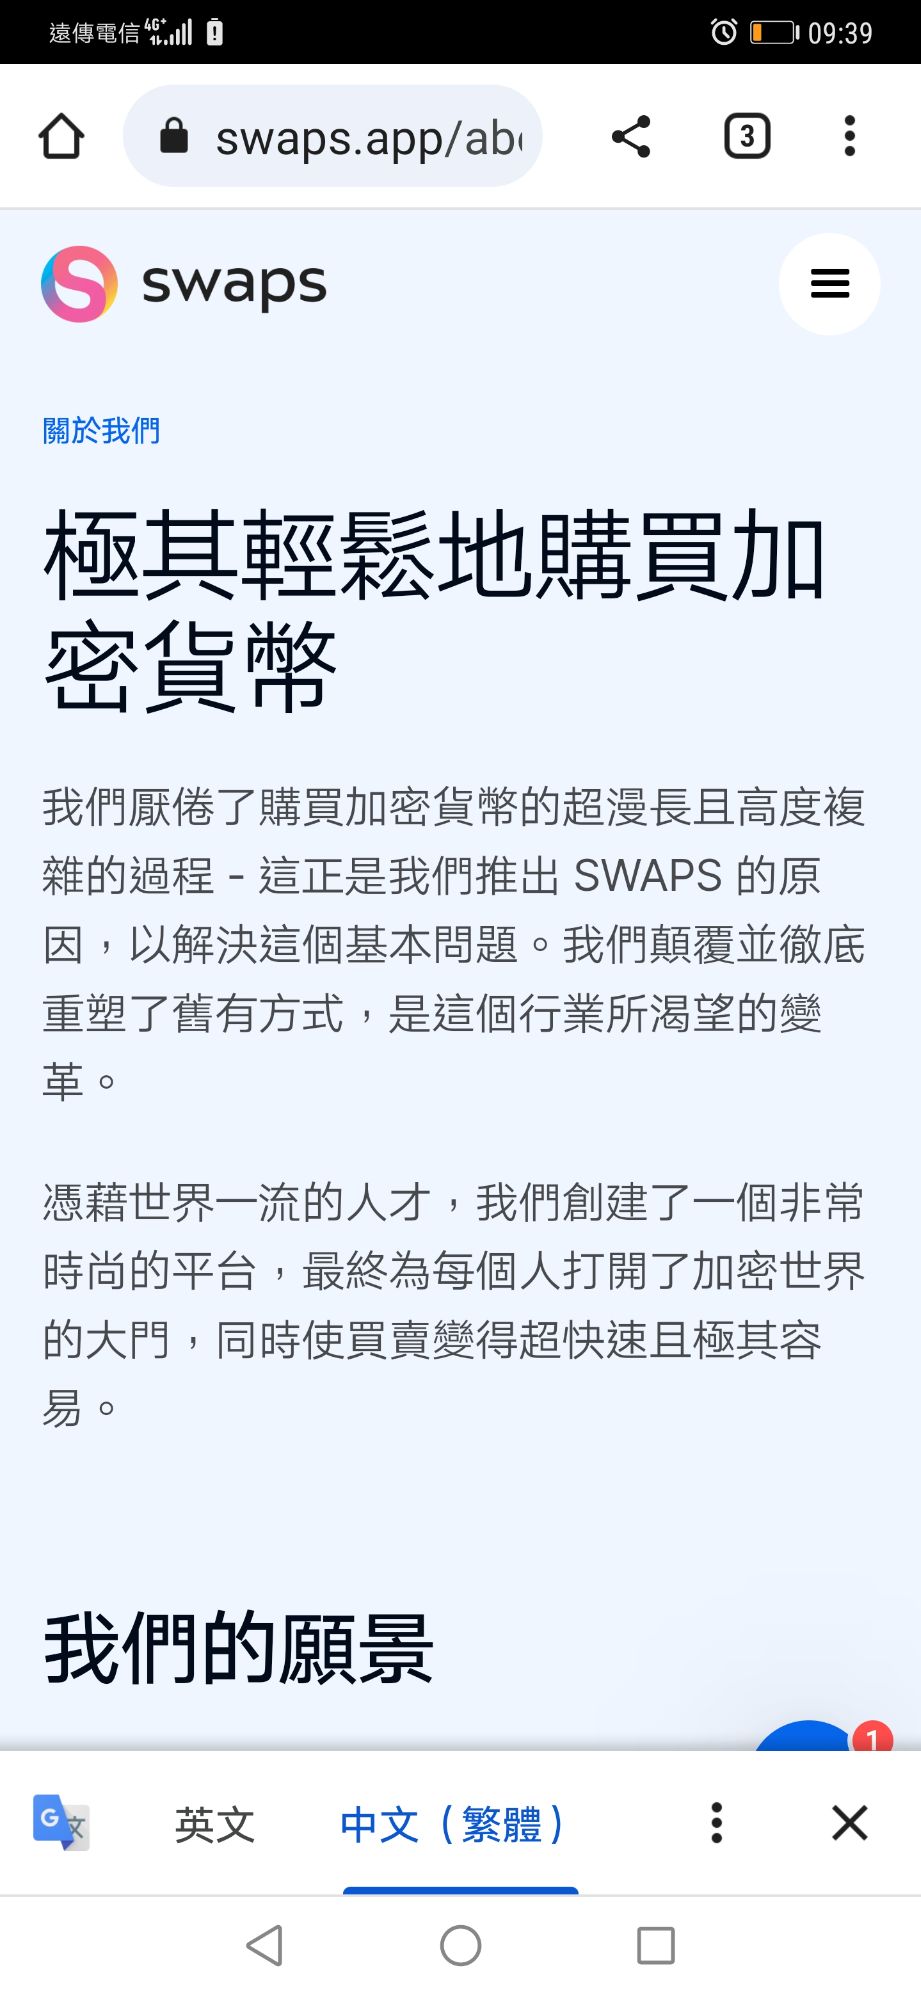 swaps. App詐騙的希望不要有下一個受害者